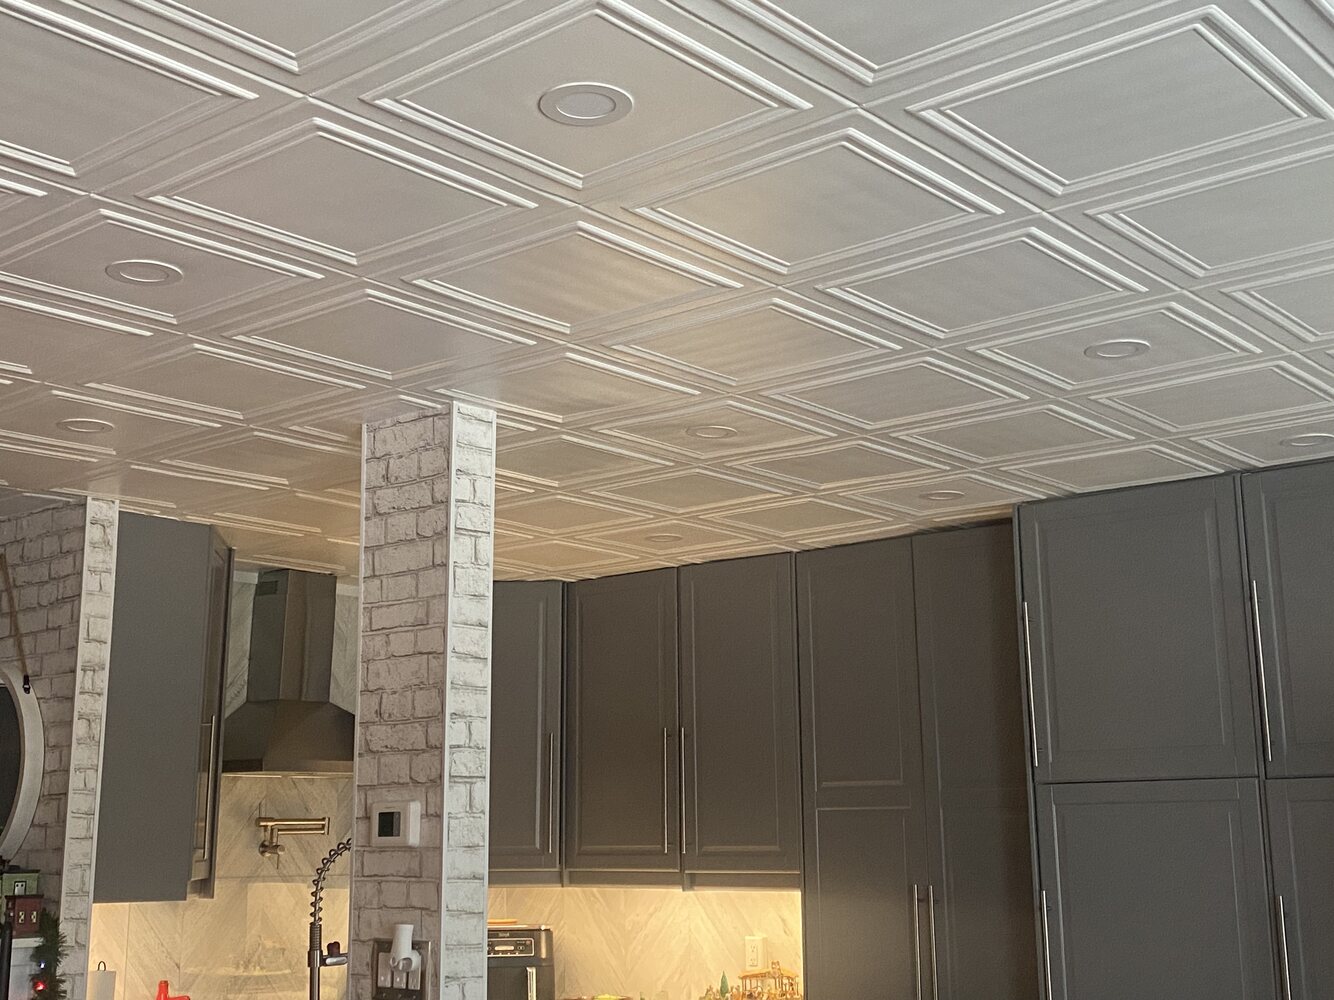 installing styrofoam ceiling tiles in toronto condo